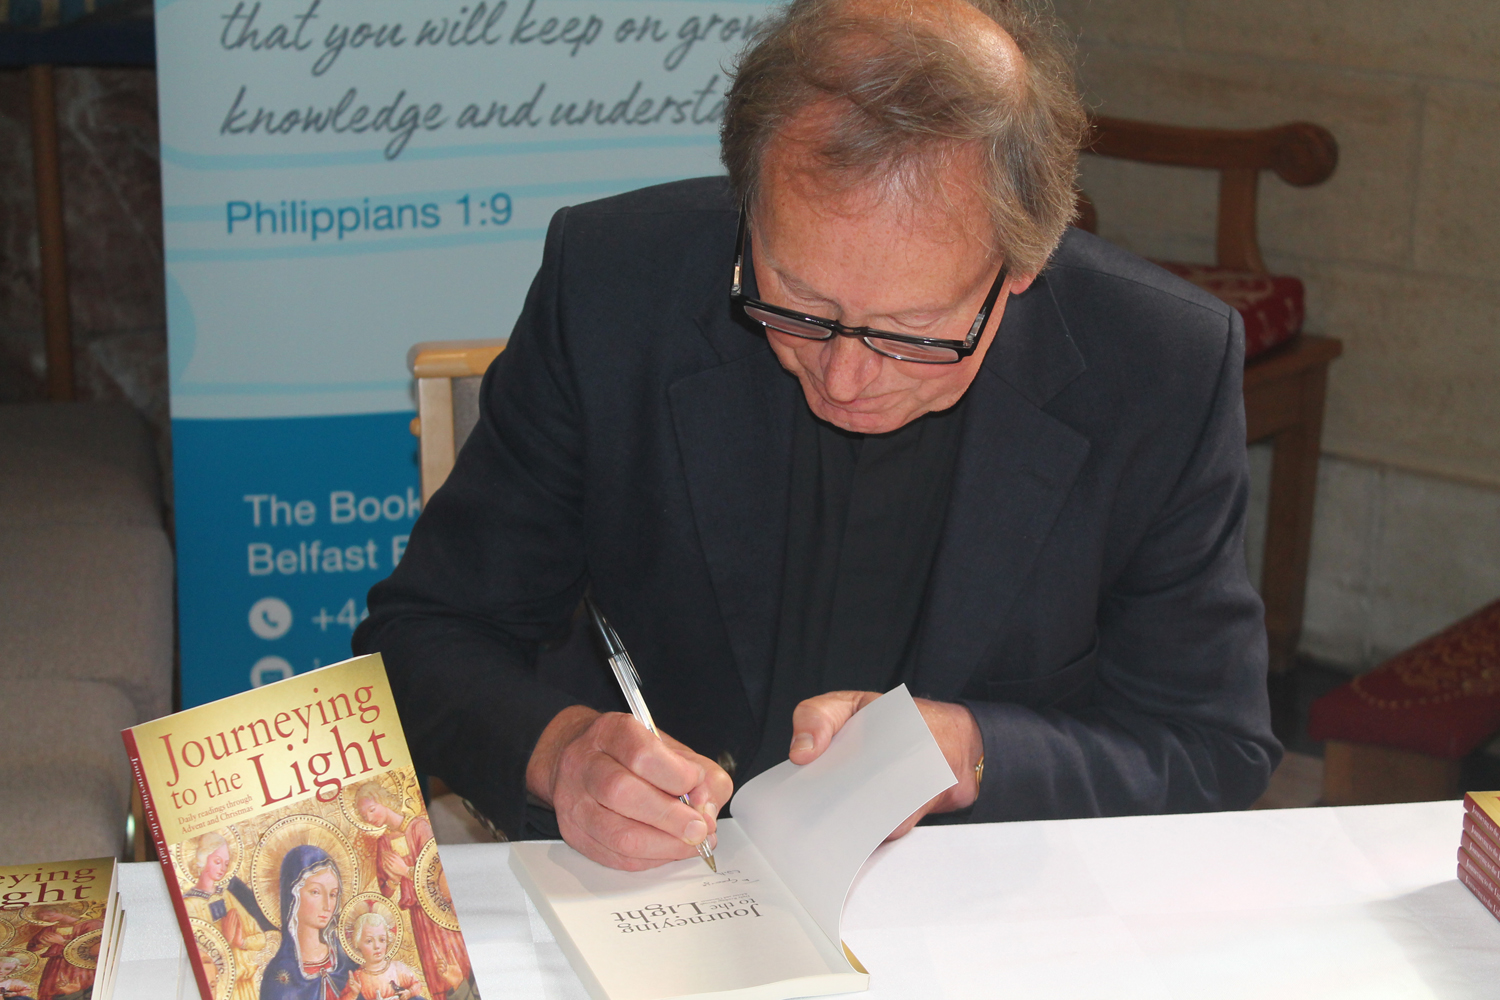 John Mann signs copies of his book.